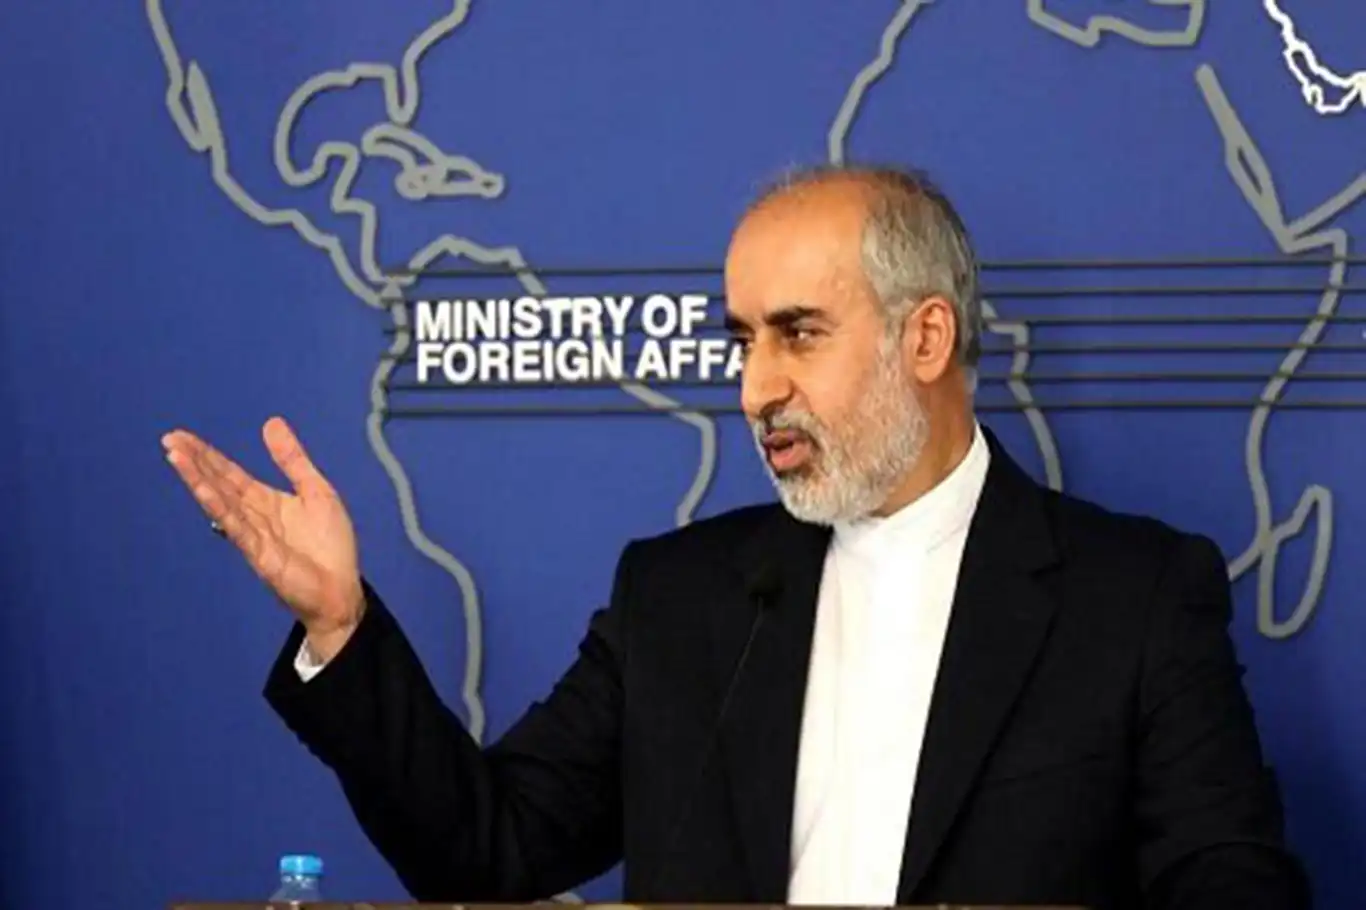 Iran condemns Canada's designation of IRGC as terrorist organization